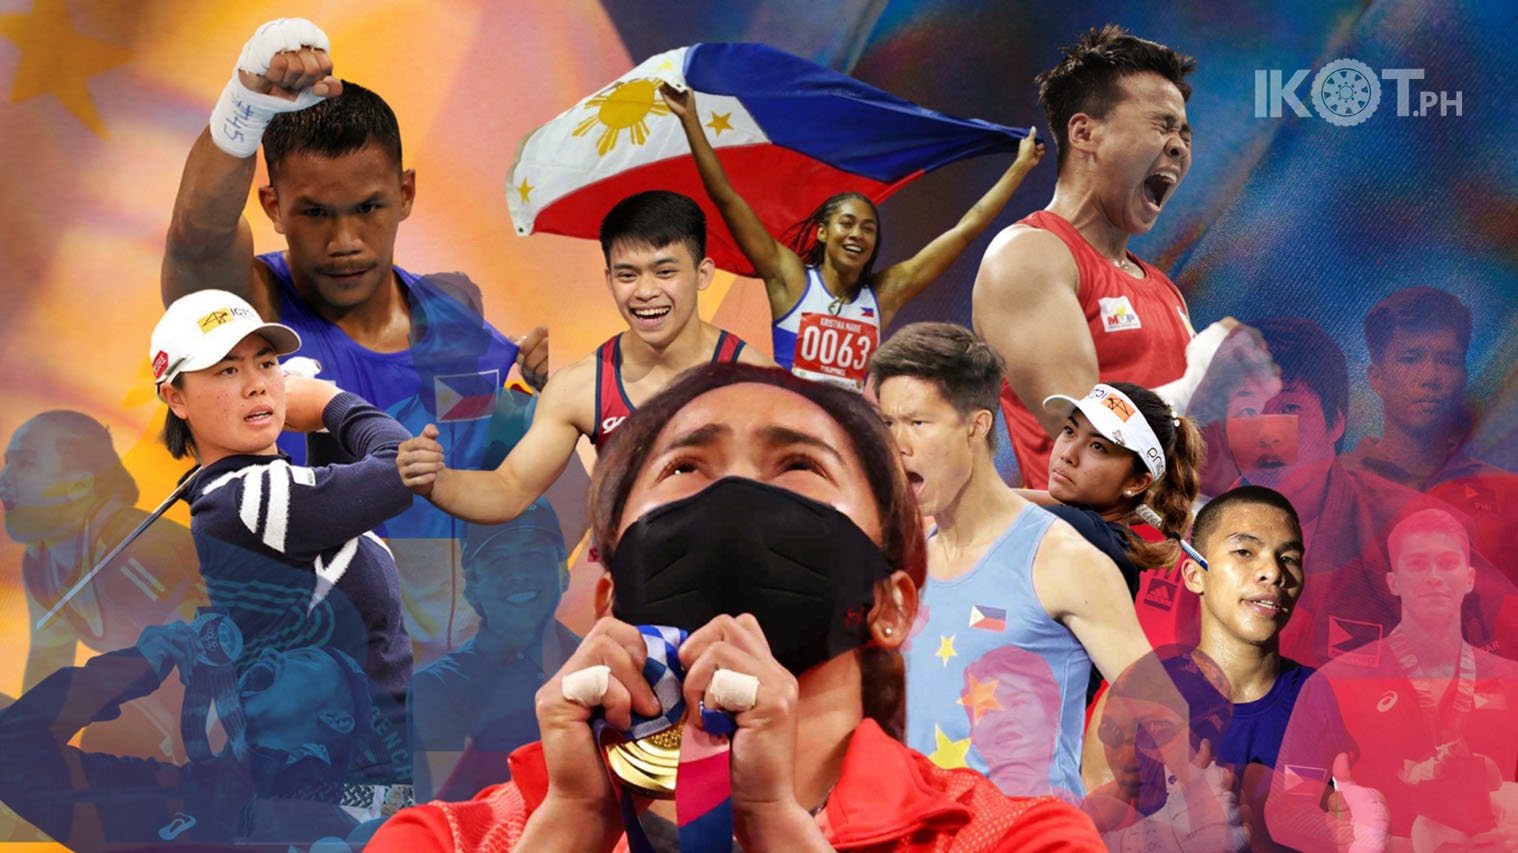 HISTORIC 2021 OLYMPIC RUN OF THE PHILIPPINES — IKOT.PH